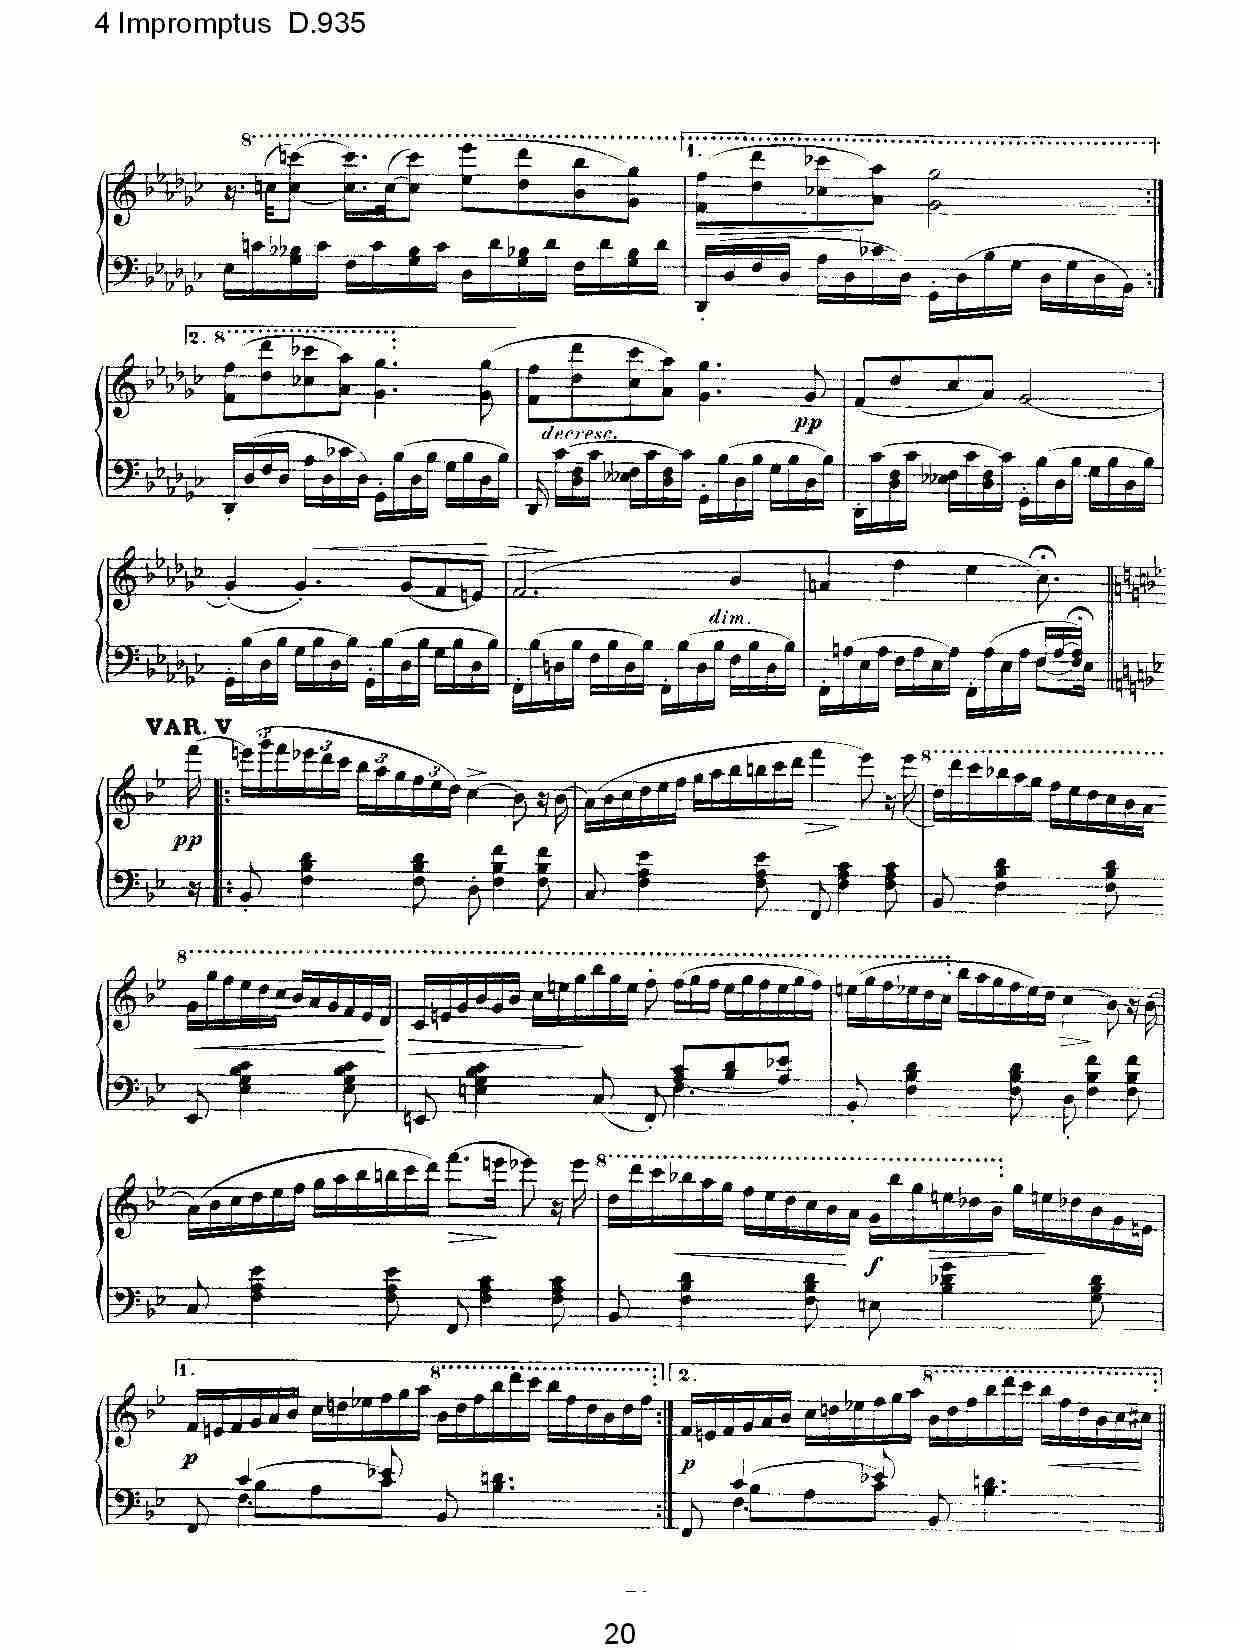 4 Impromptus D.935（4人即兴演奏D.935）钢琴曲谱（图20）